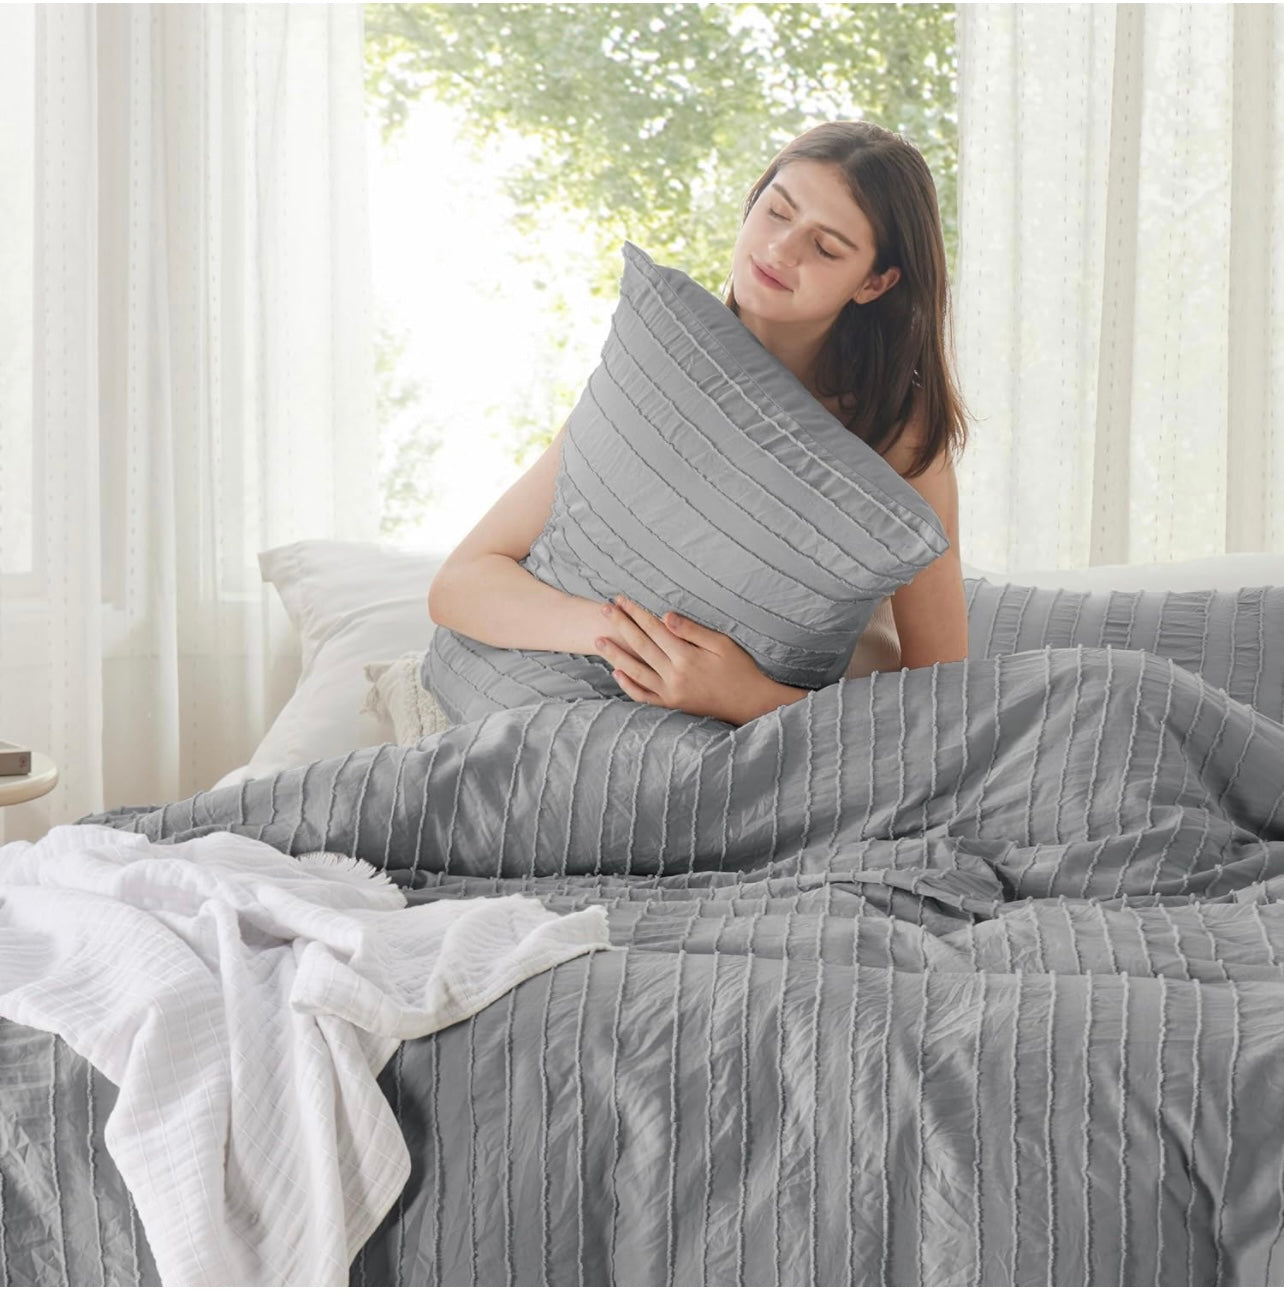 Bedsure Boho Comforter Queen - Grey Tufted Bedding Comforter for all seasons 3 piece set